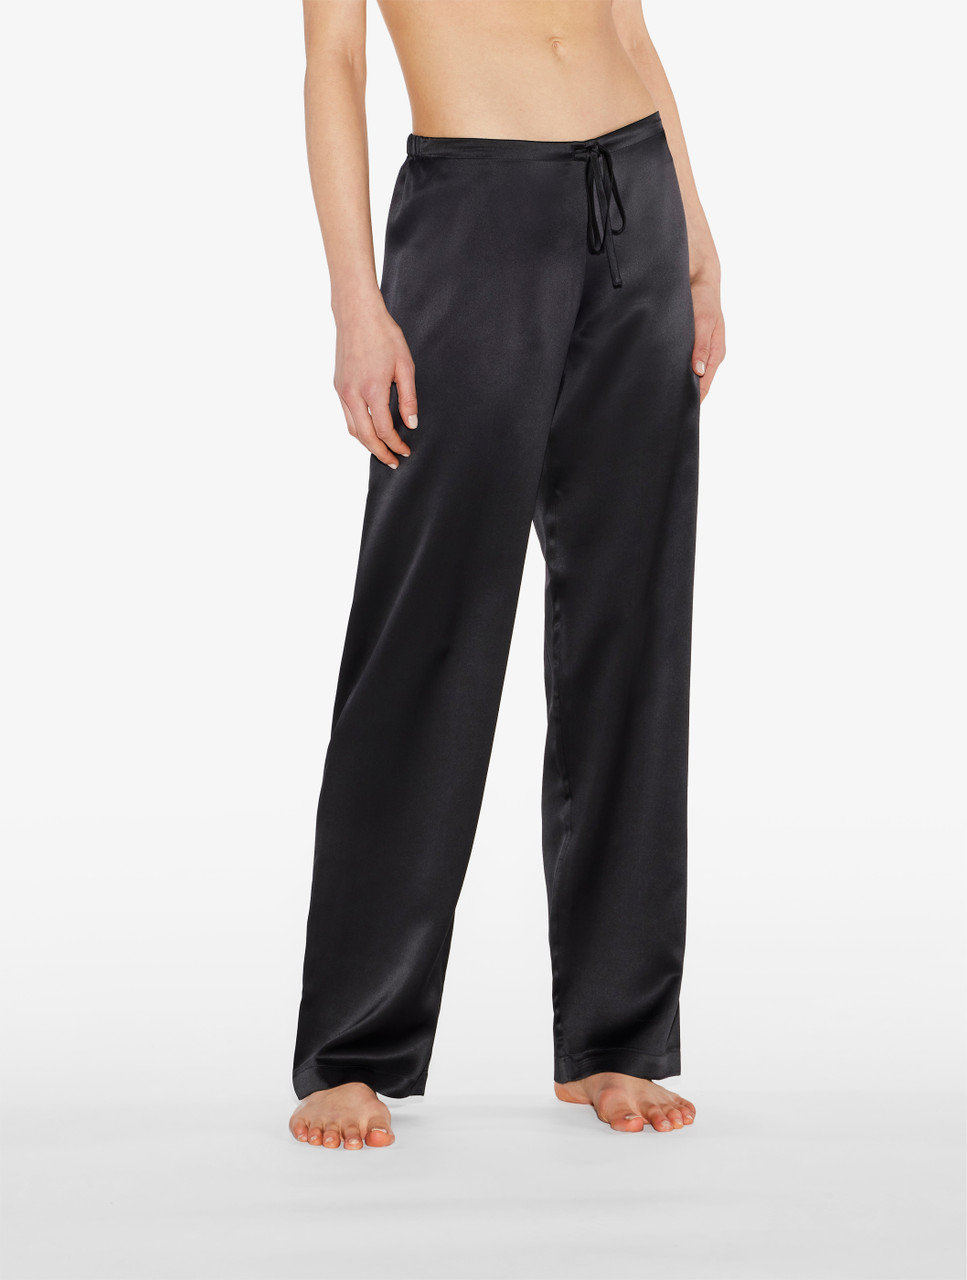 Women's Silk Sleepwear 100% Silk Pajama Pants | OSCAR ROSSA